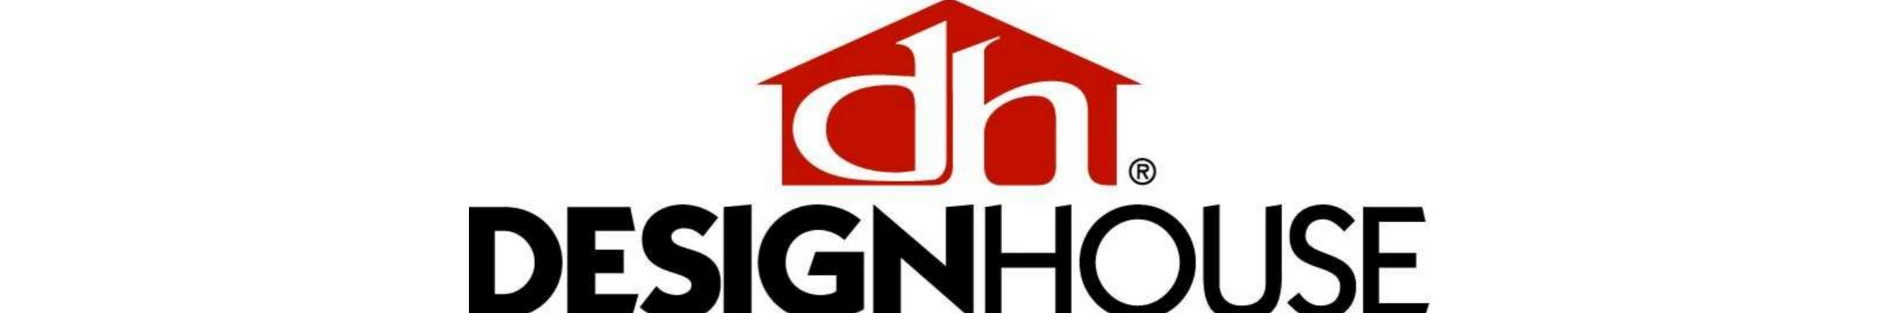 Design House logo 